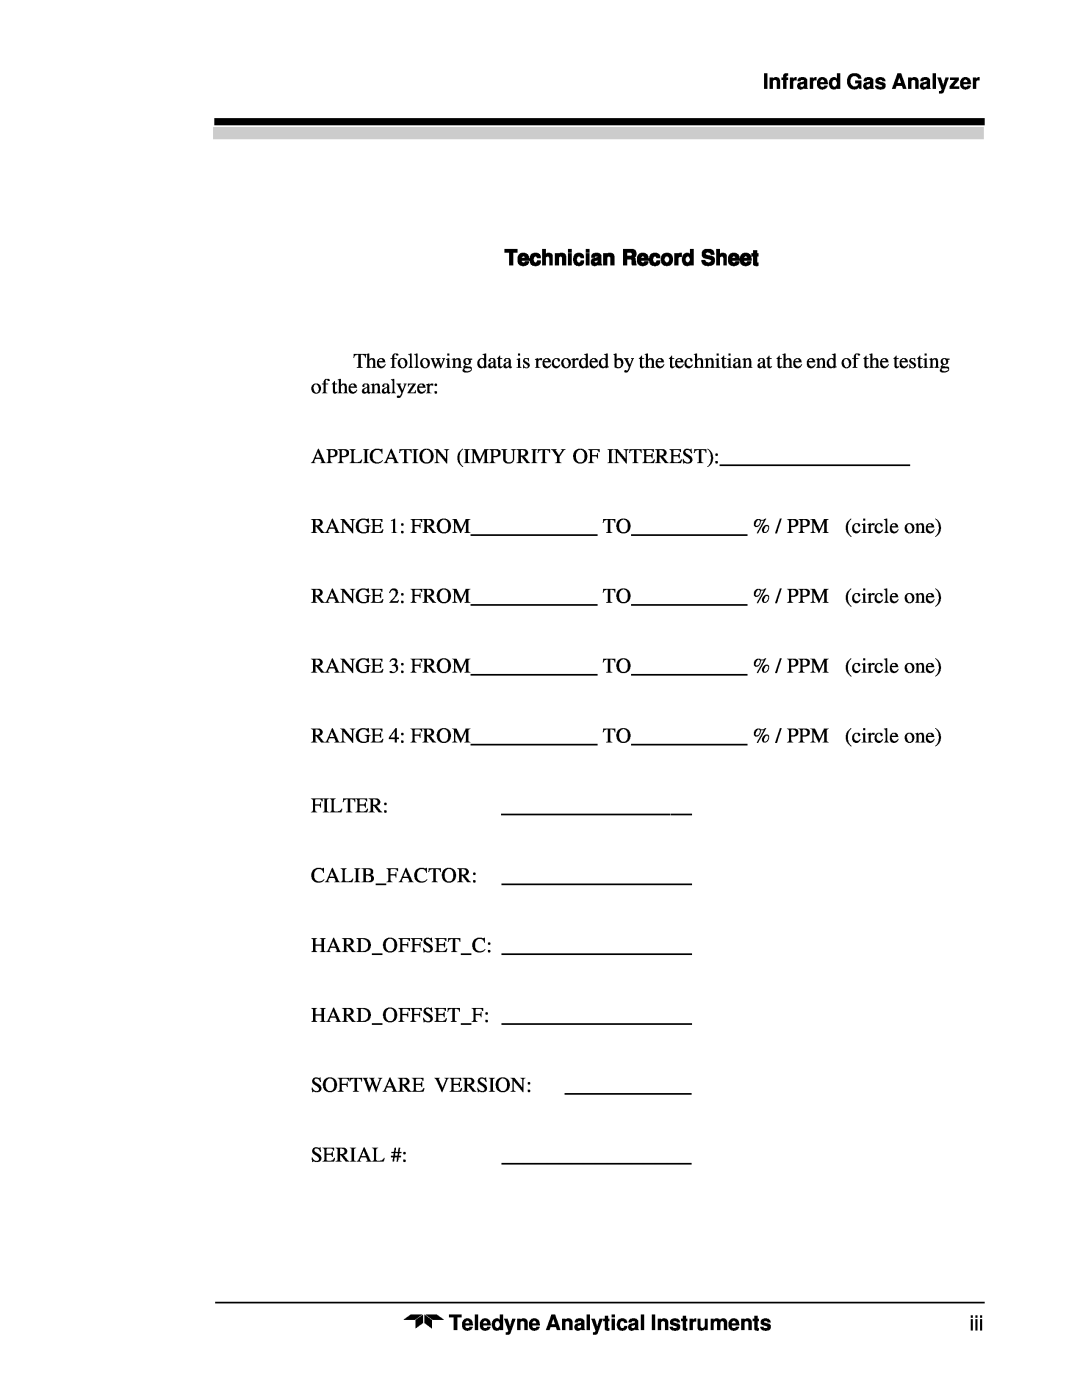 Teledyne 7300A manual Infrared Gas Analyzer Technician Record Sheet, Teledyne Analytical Instruments 